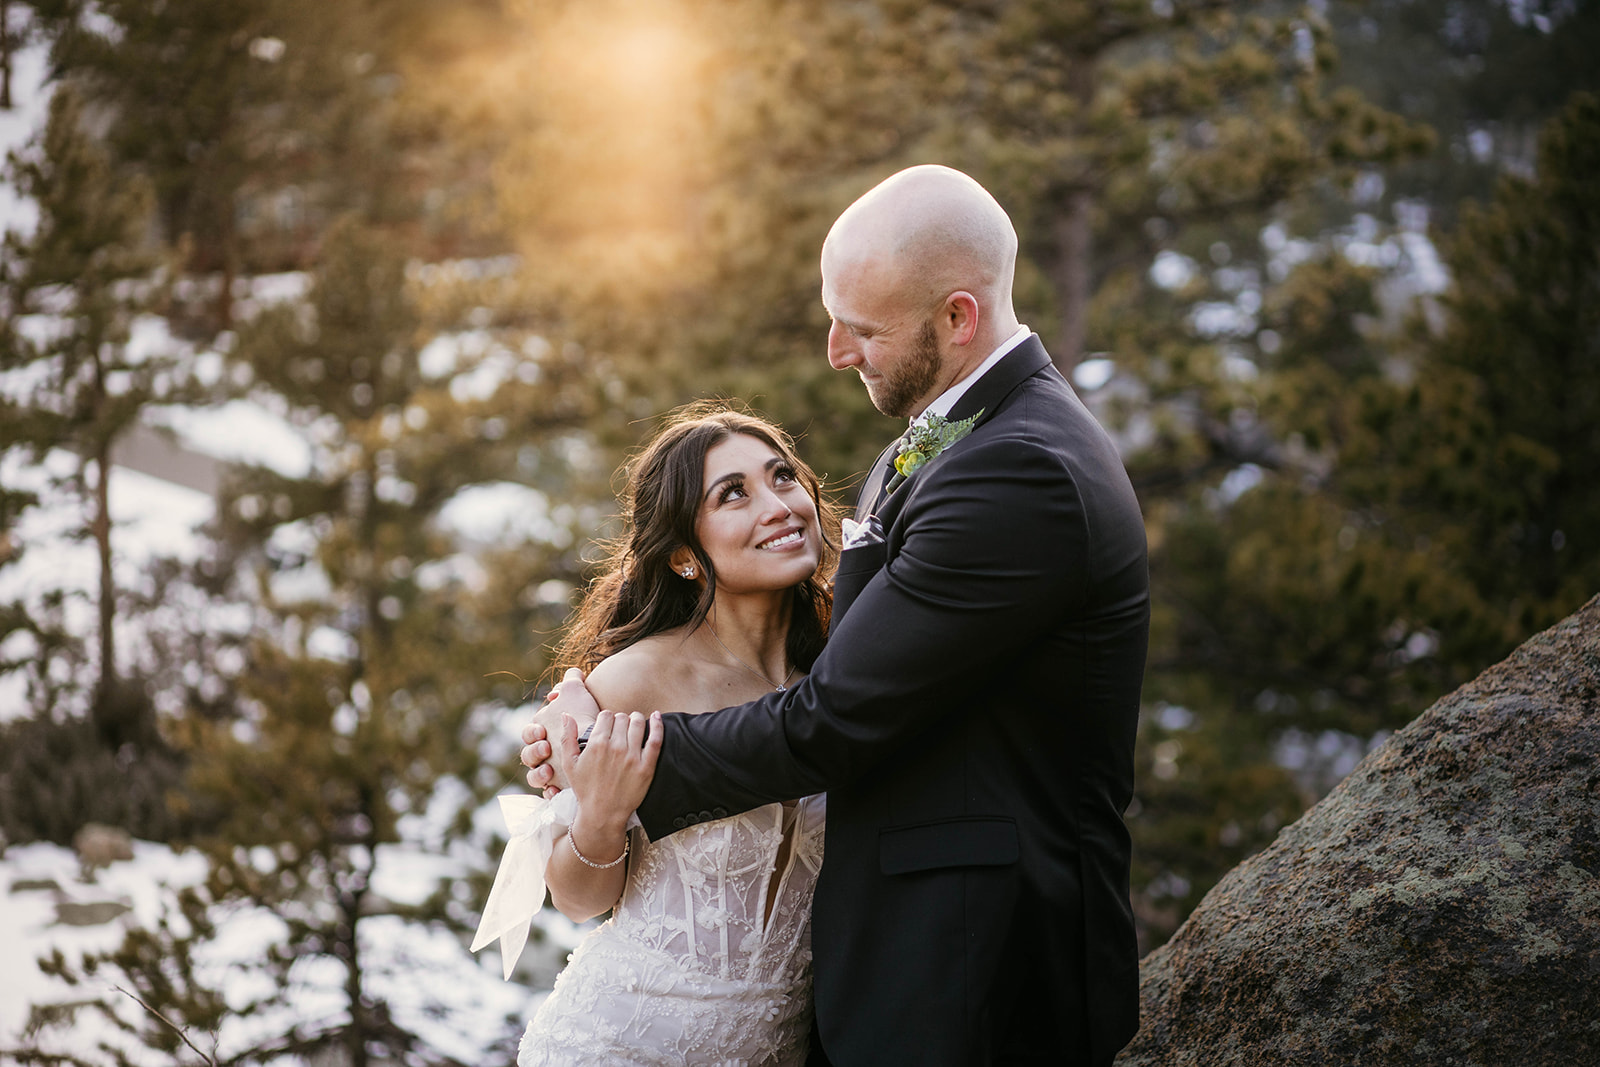 Romantic golden hour couples photos in the forest at winter mountain wedding at Black Canyon Inn in Estes Park, Colorado